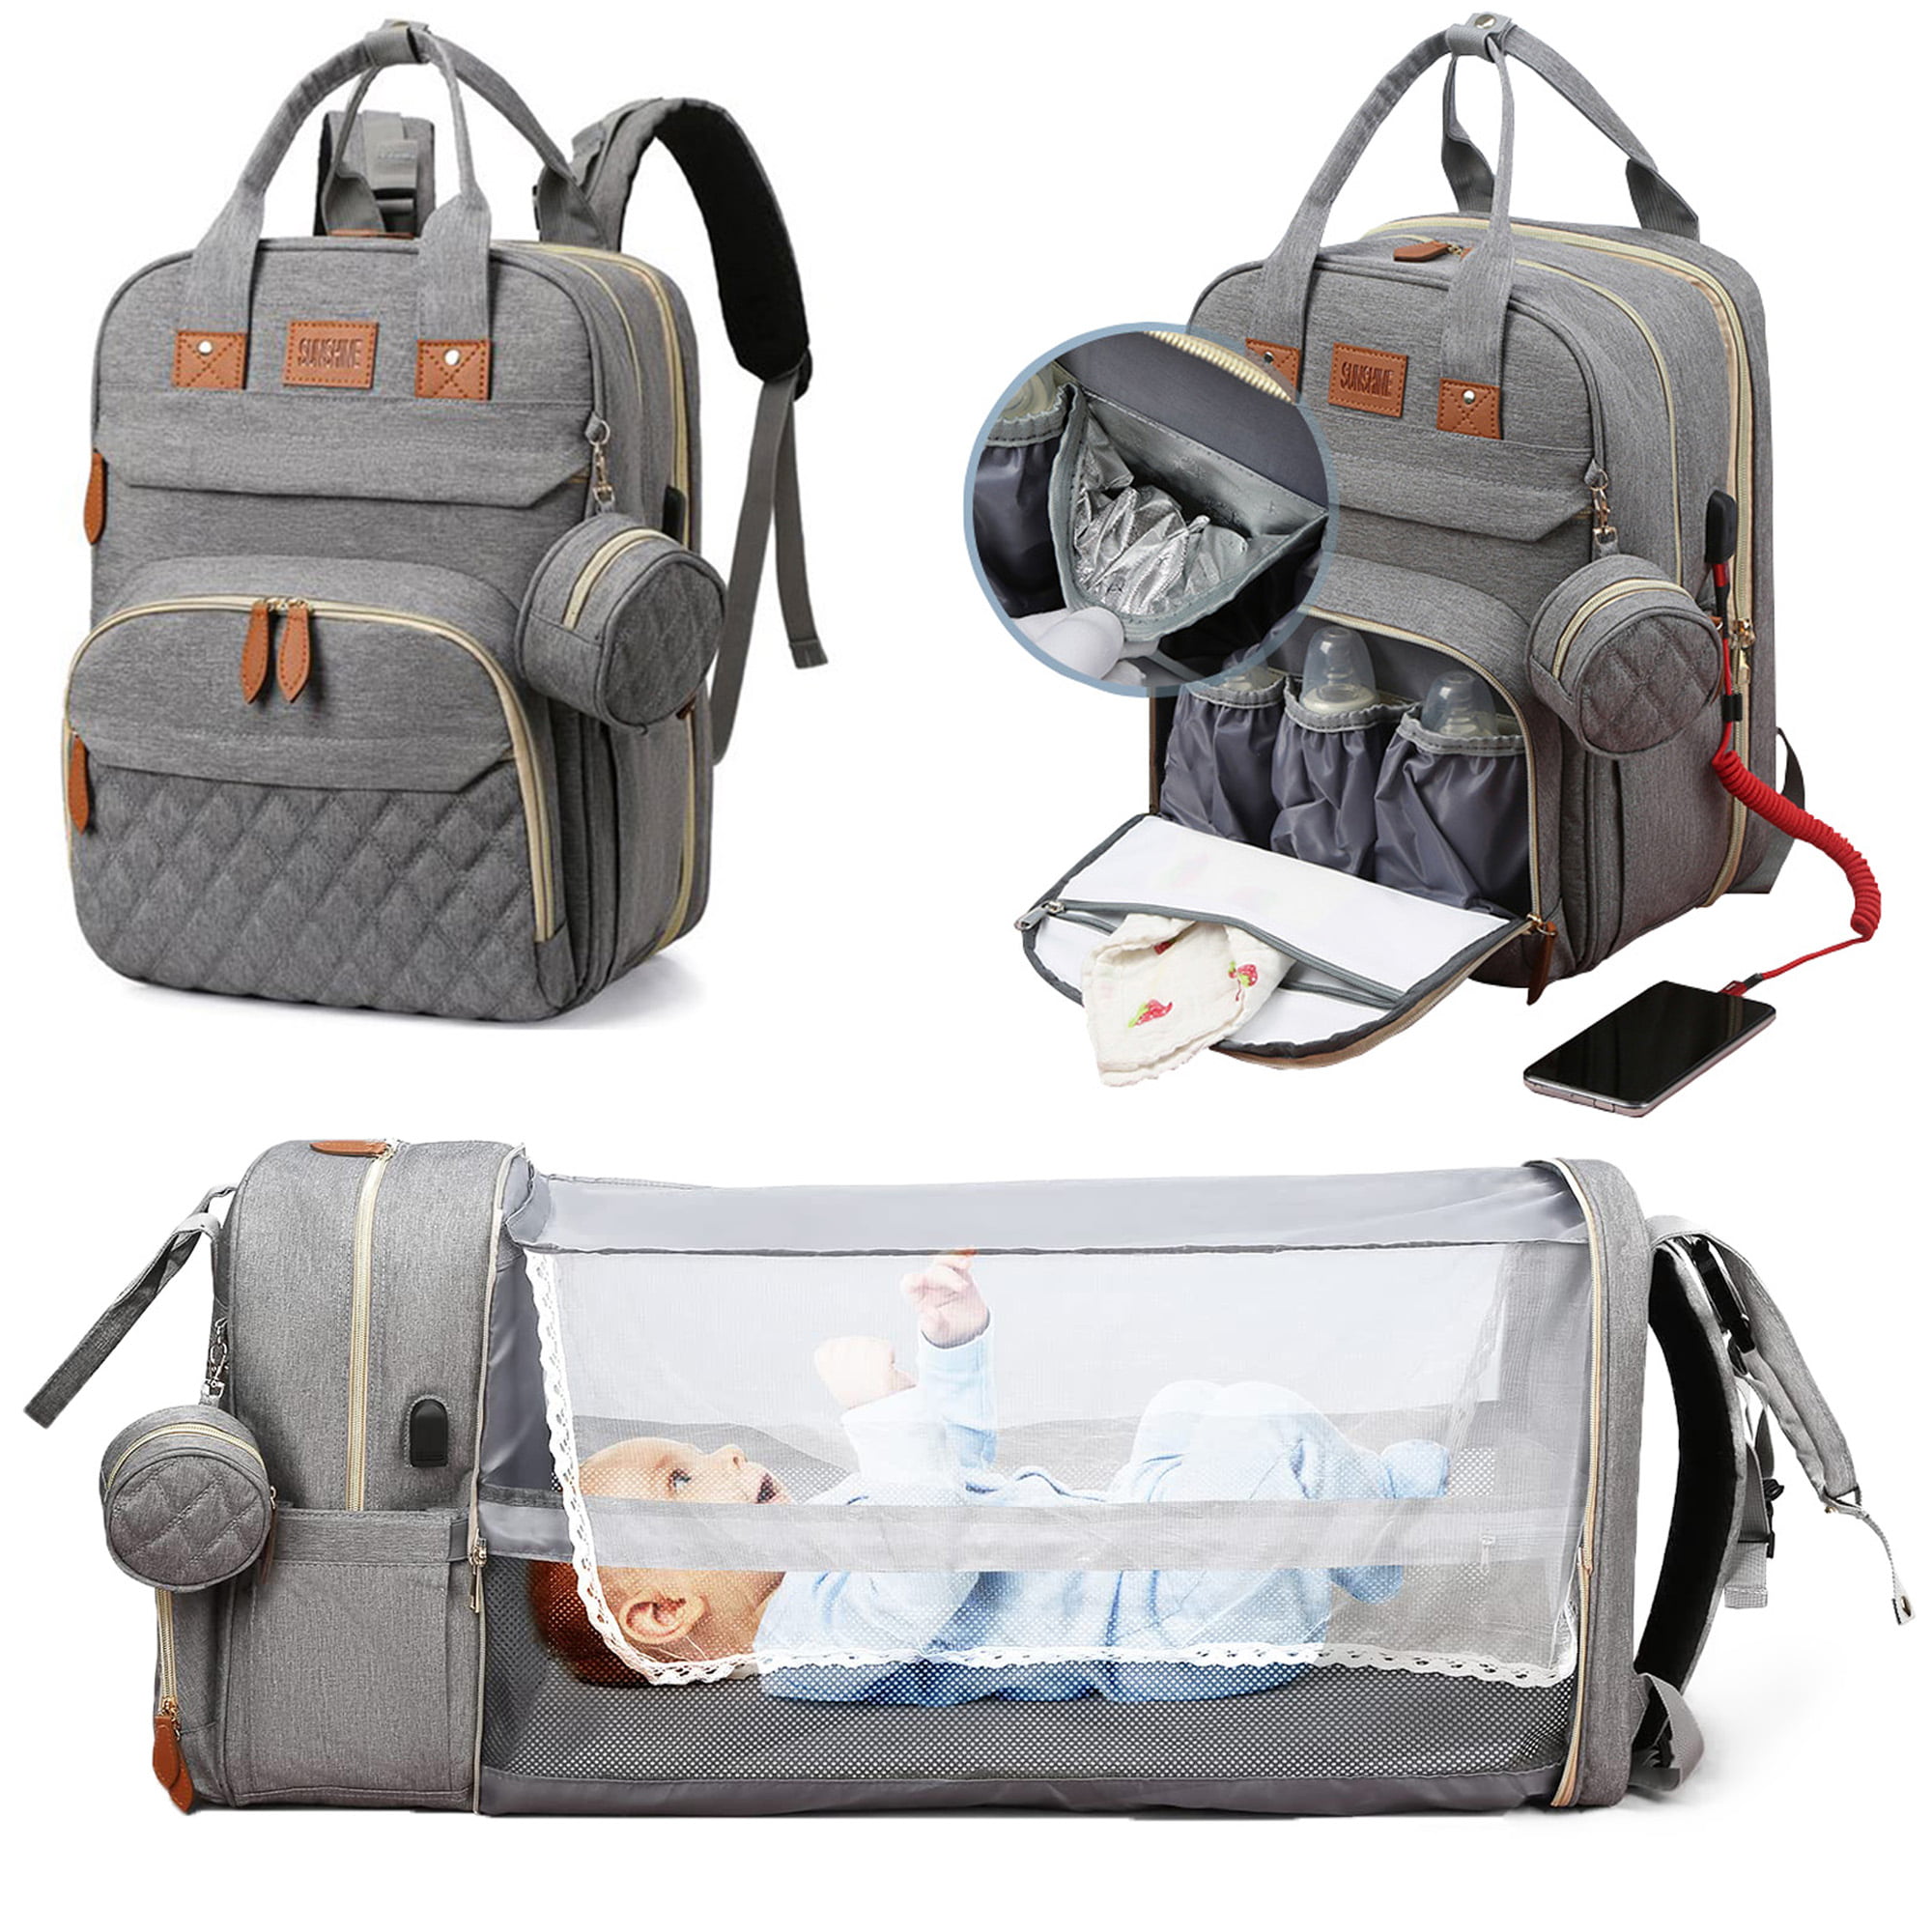 Navy Blue&Plus Himawari Travel Backpack Large Diaper Bag School Multi-Function Backpack for Women&Men 17.7x11.8x7.9 